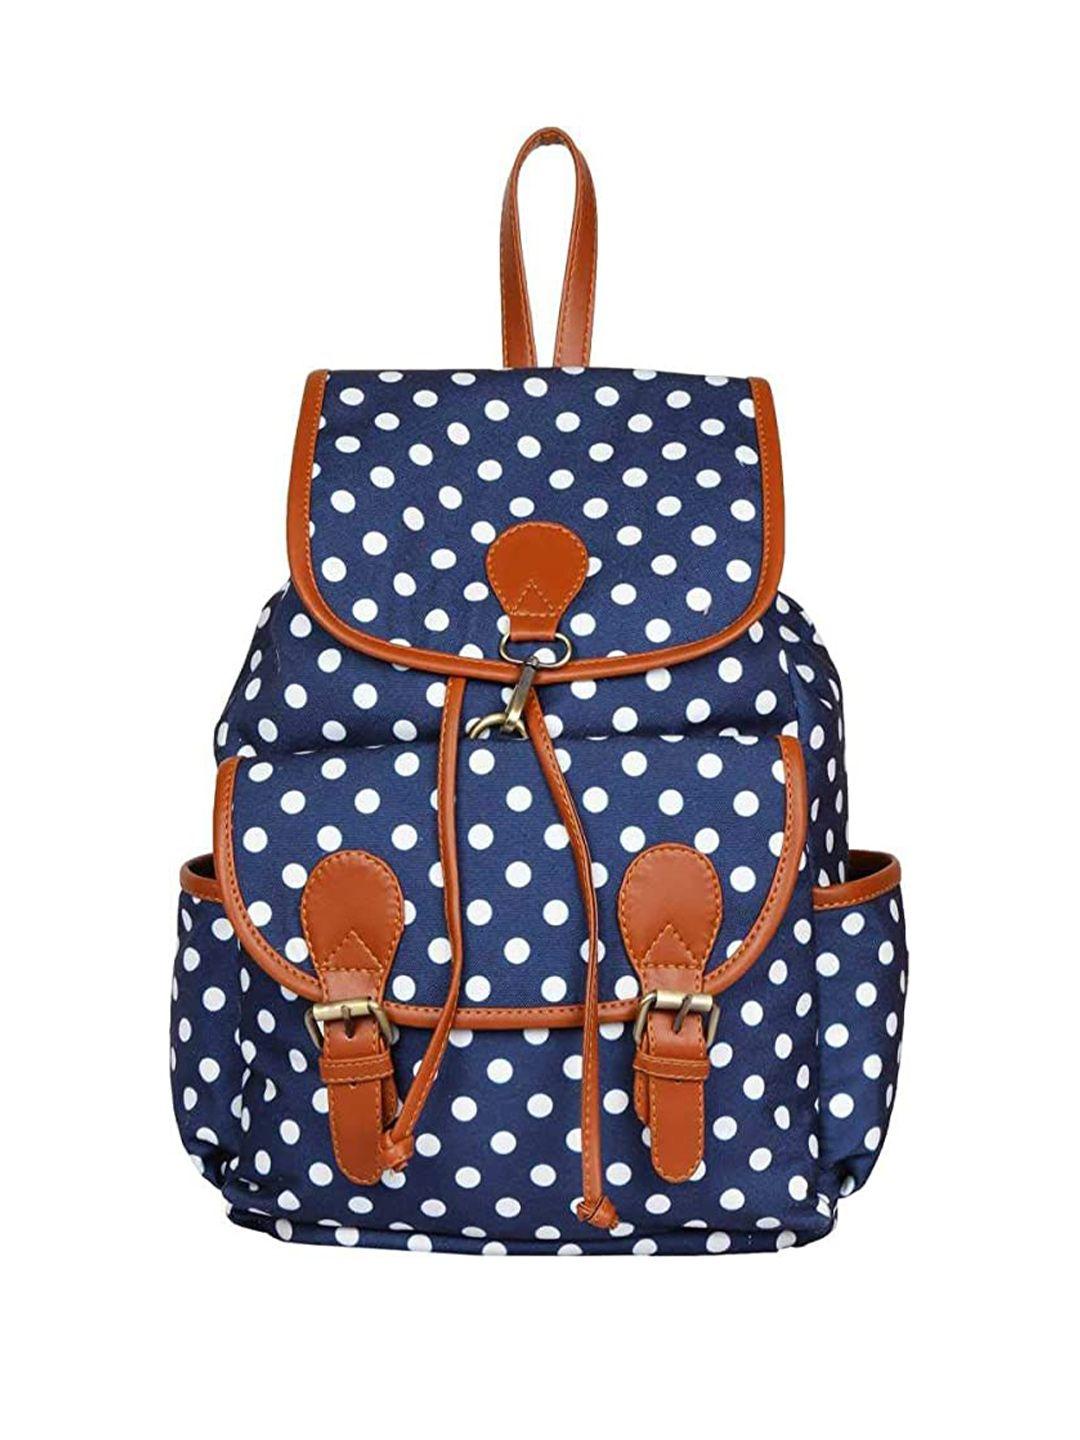 mast & harbour blue & white polka dots printed backpack